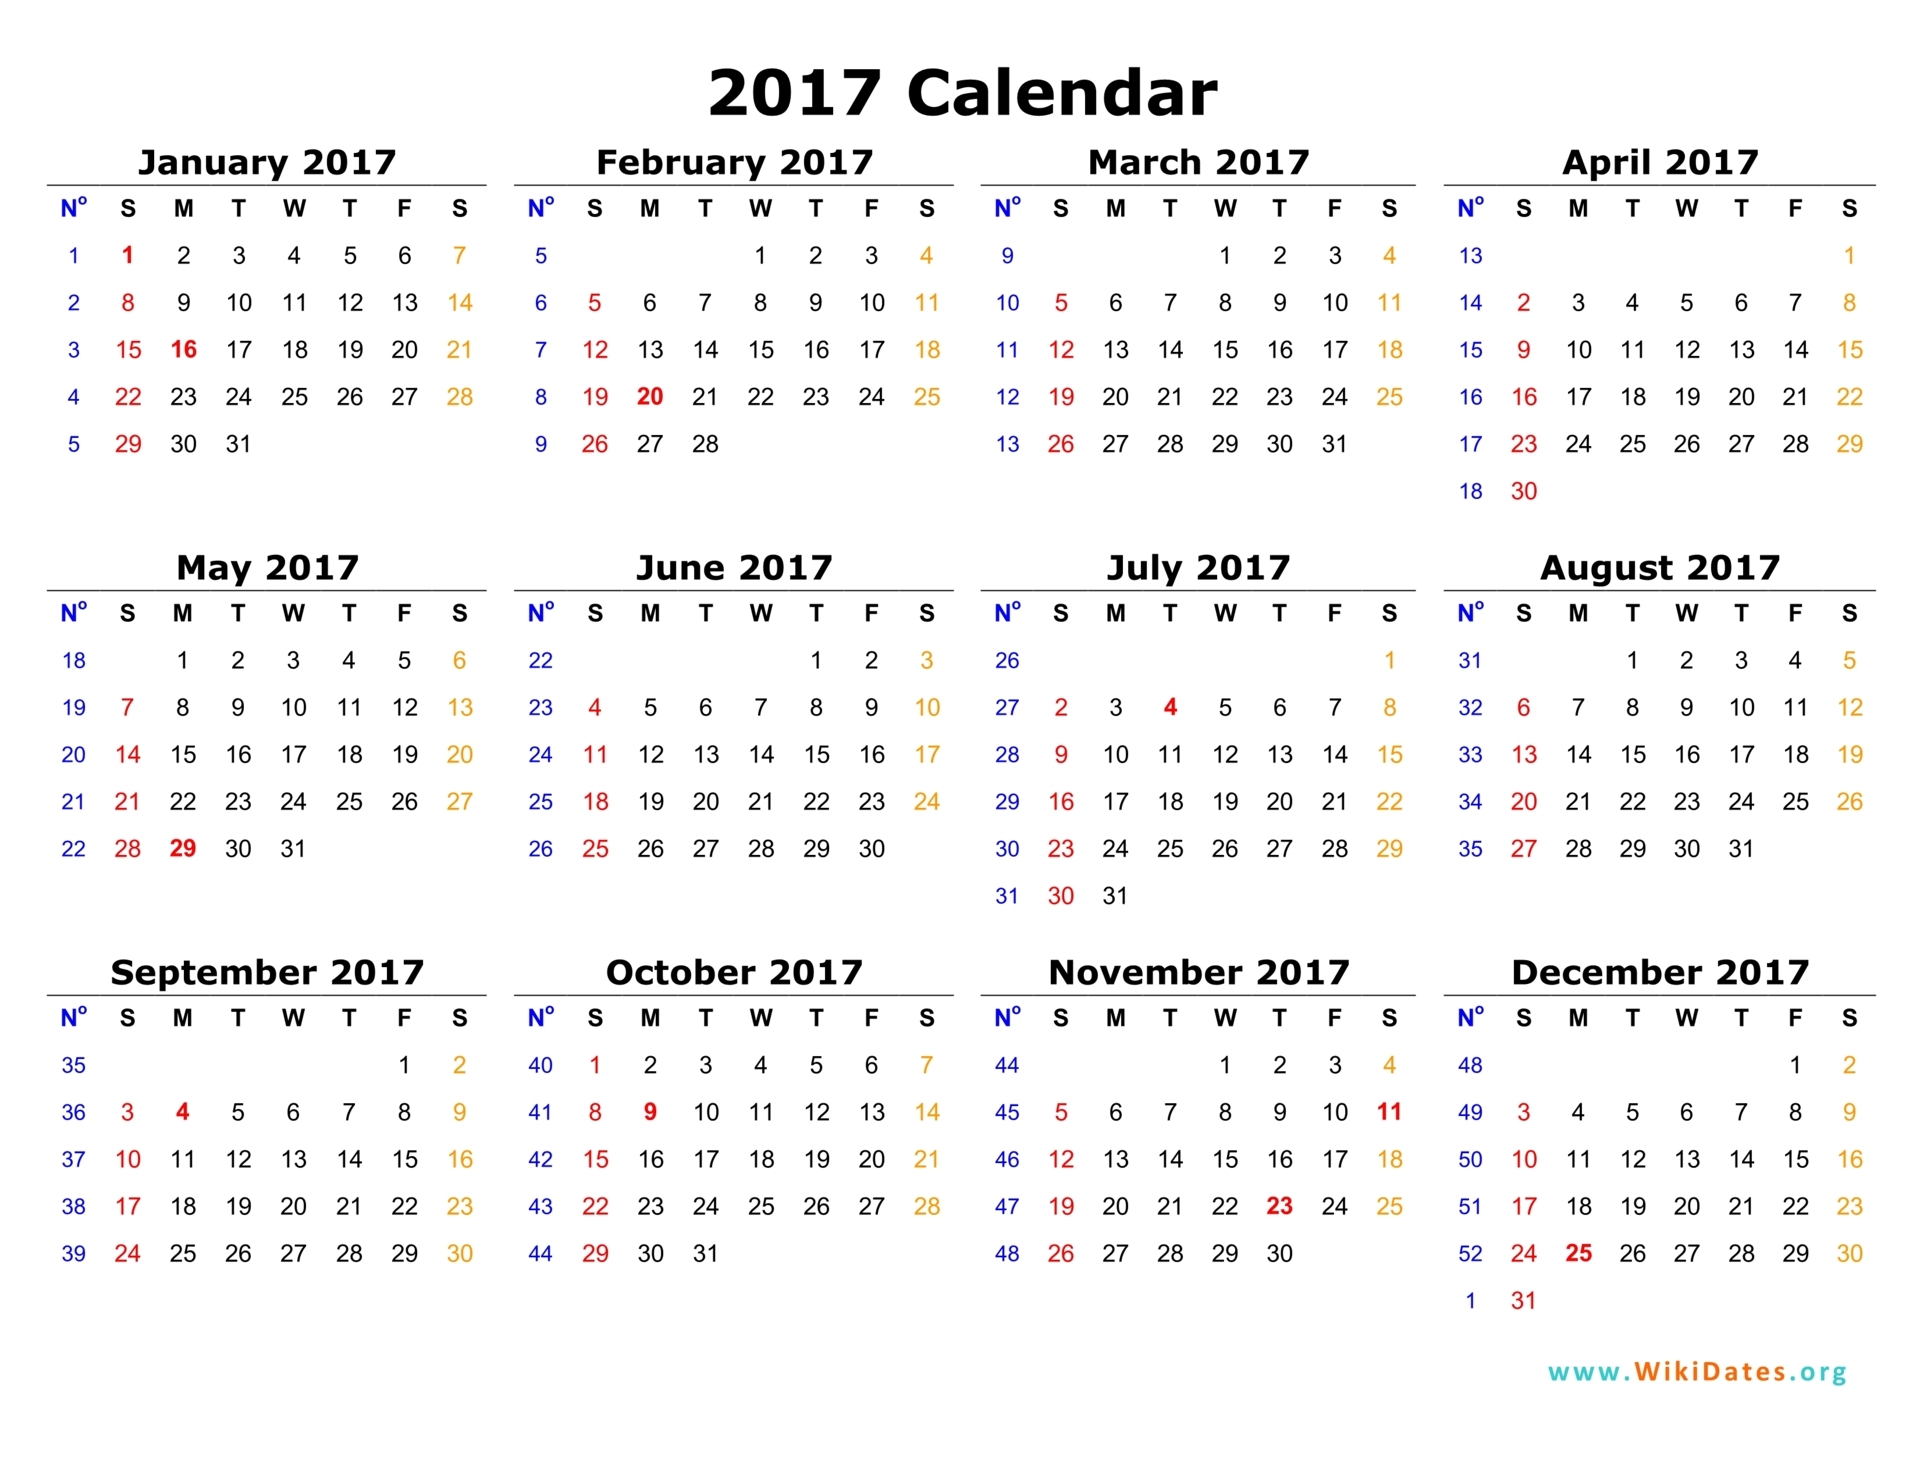 2017-calendar-wikidates